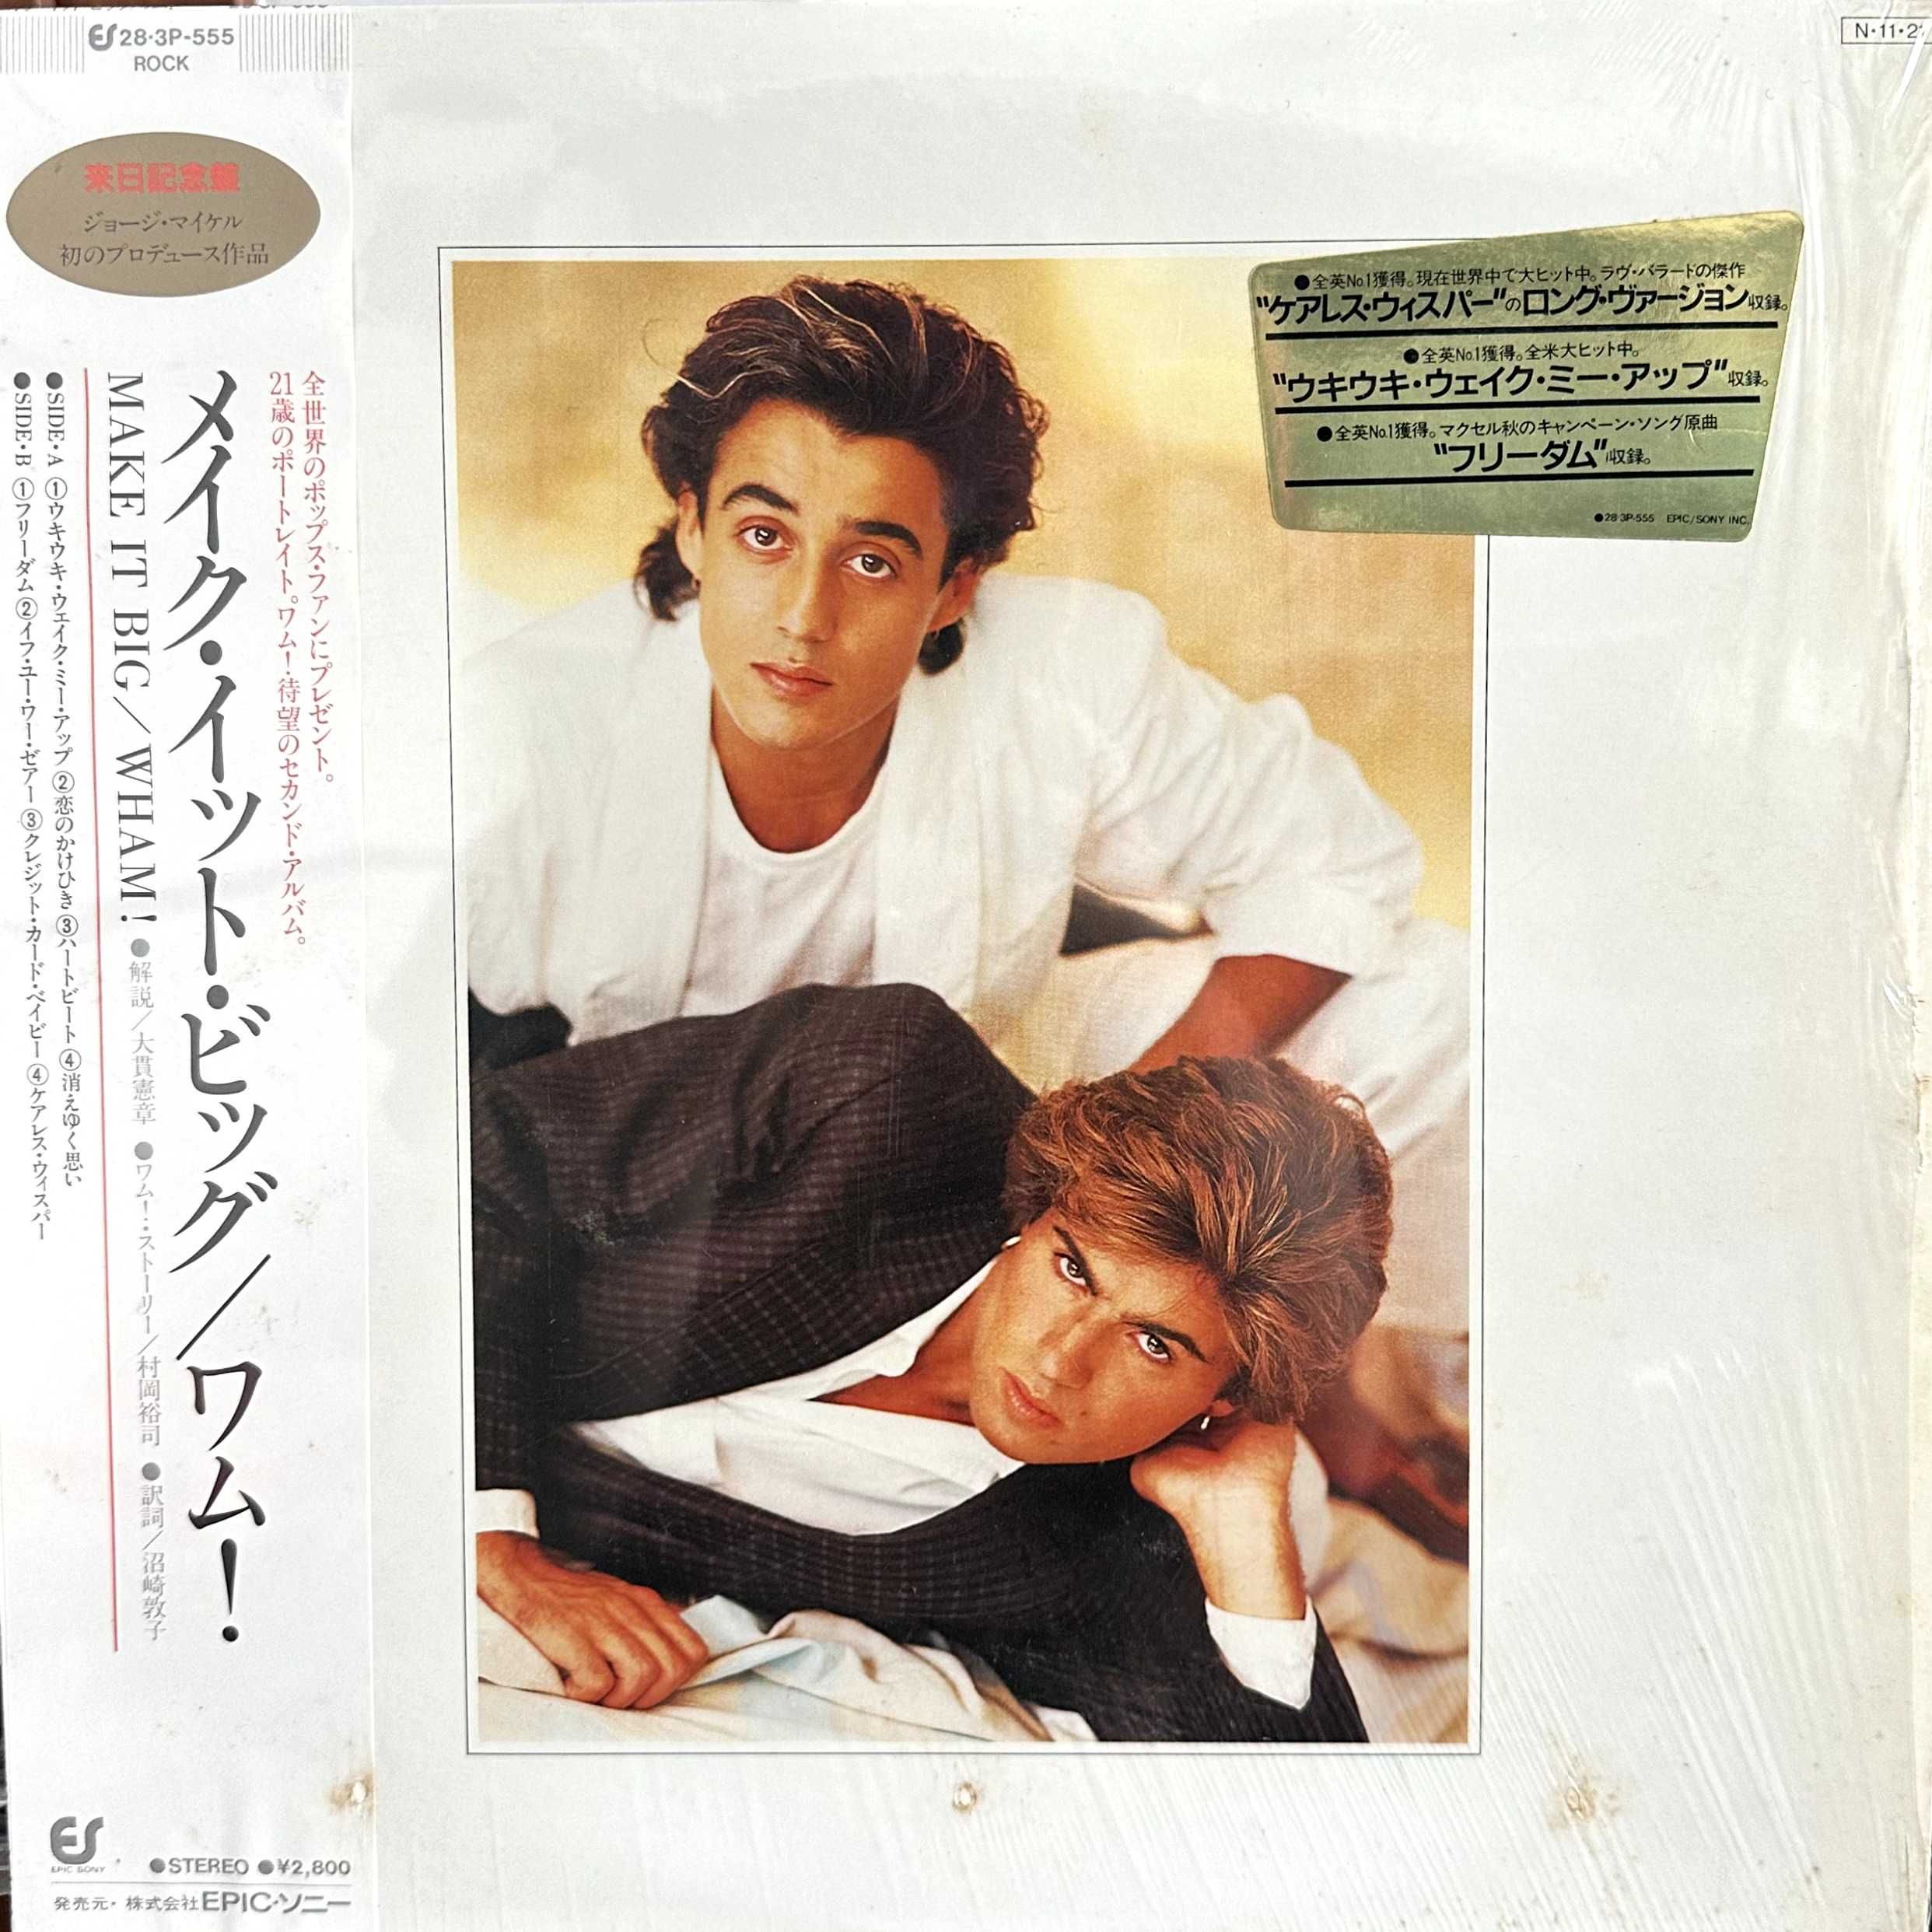 WHAM! - Make it Big (Vinyl, 1984, Japan)